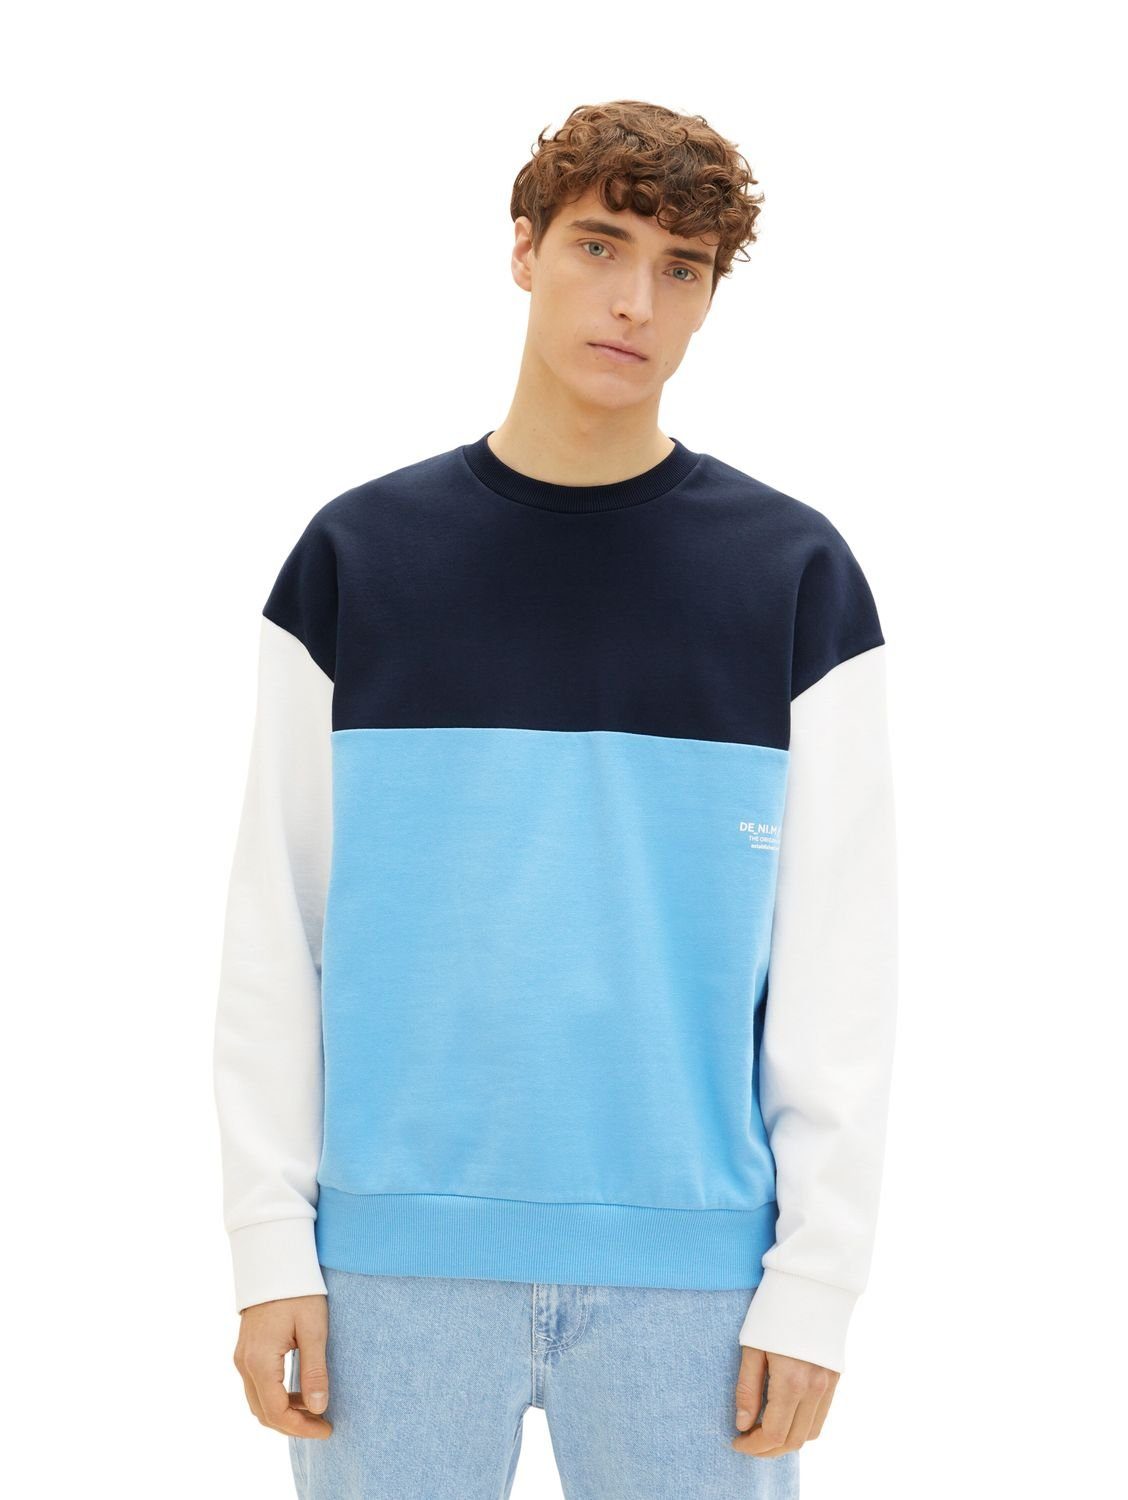 TOM TAILOR Denim 18395 Sky Sweatshirt Blue Rainy Baumwolle COLORBLOCK aus